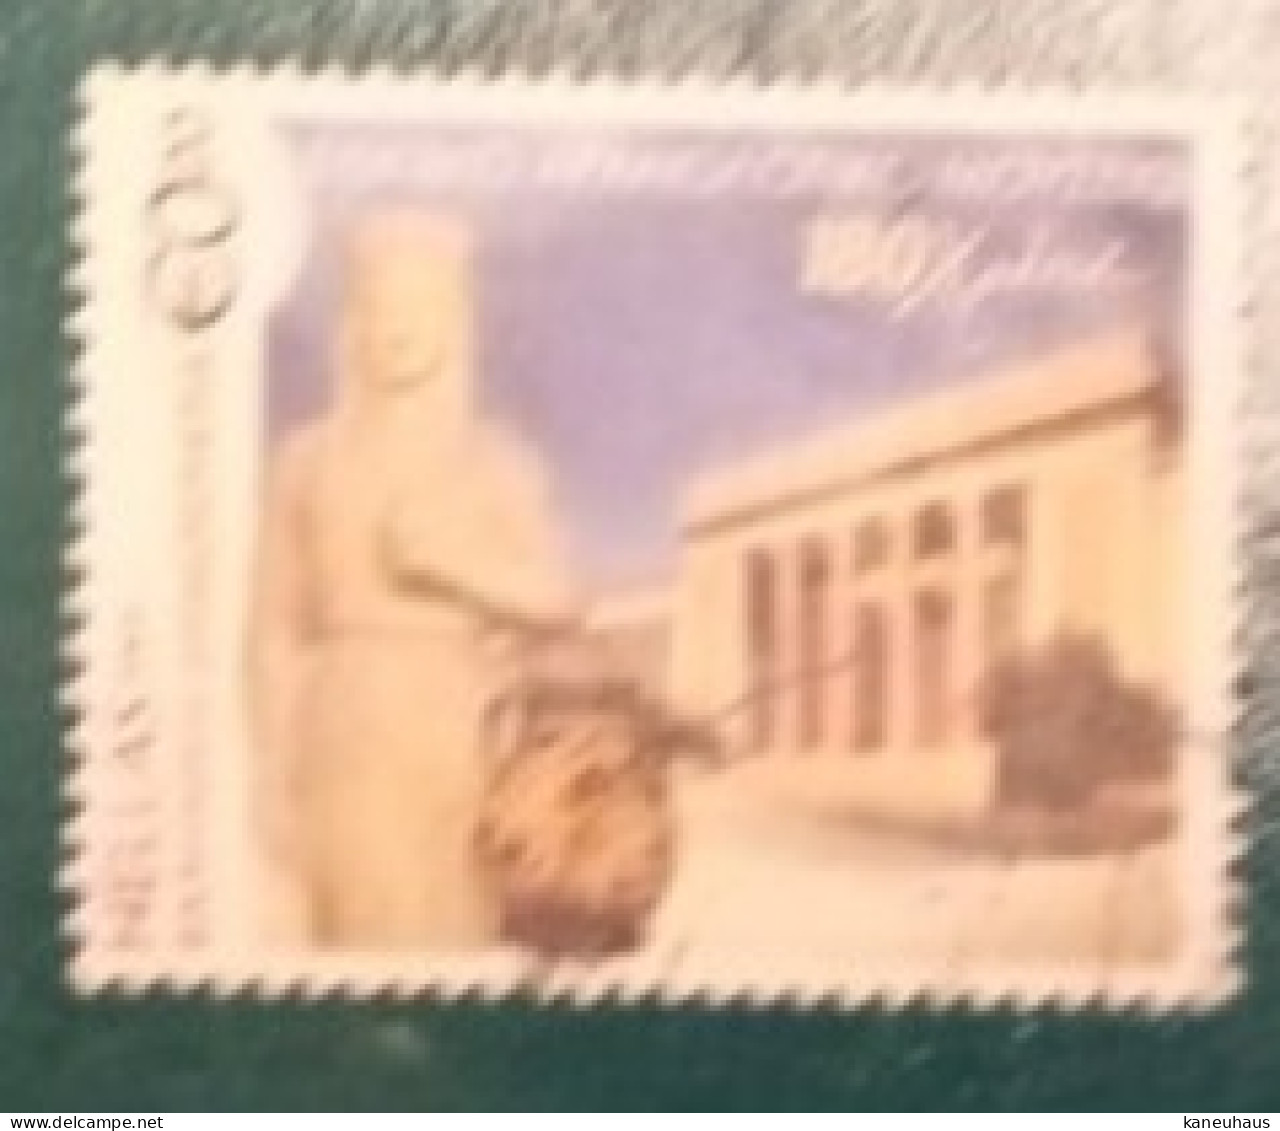 2009 Michel-Nr. 2505 Gestempelt - Used Stamps